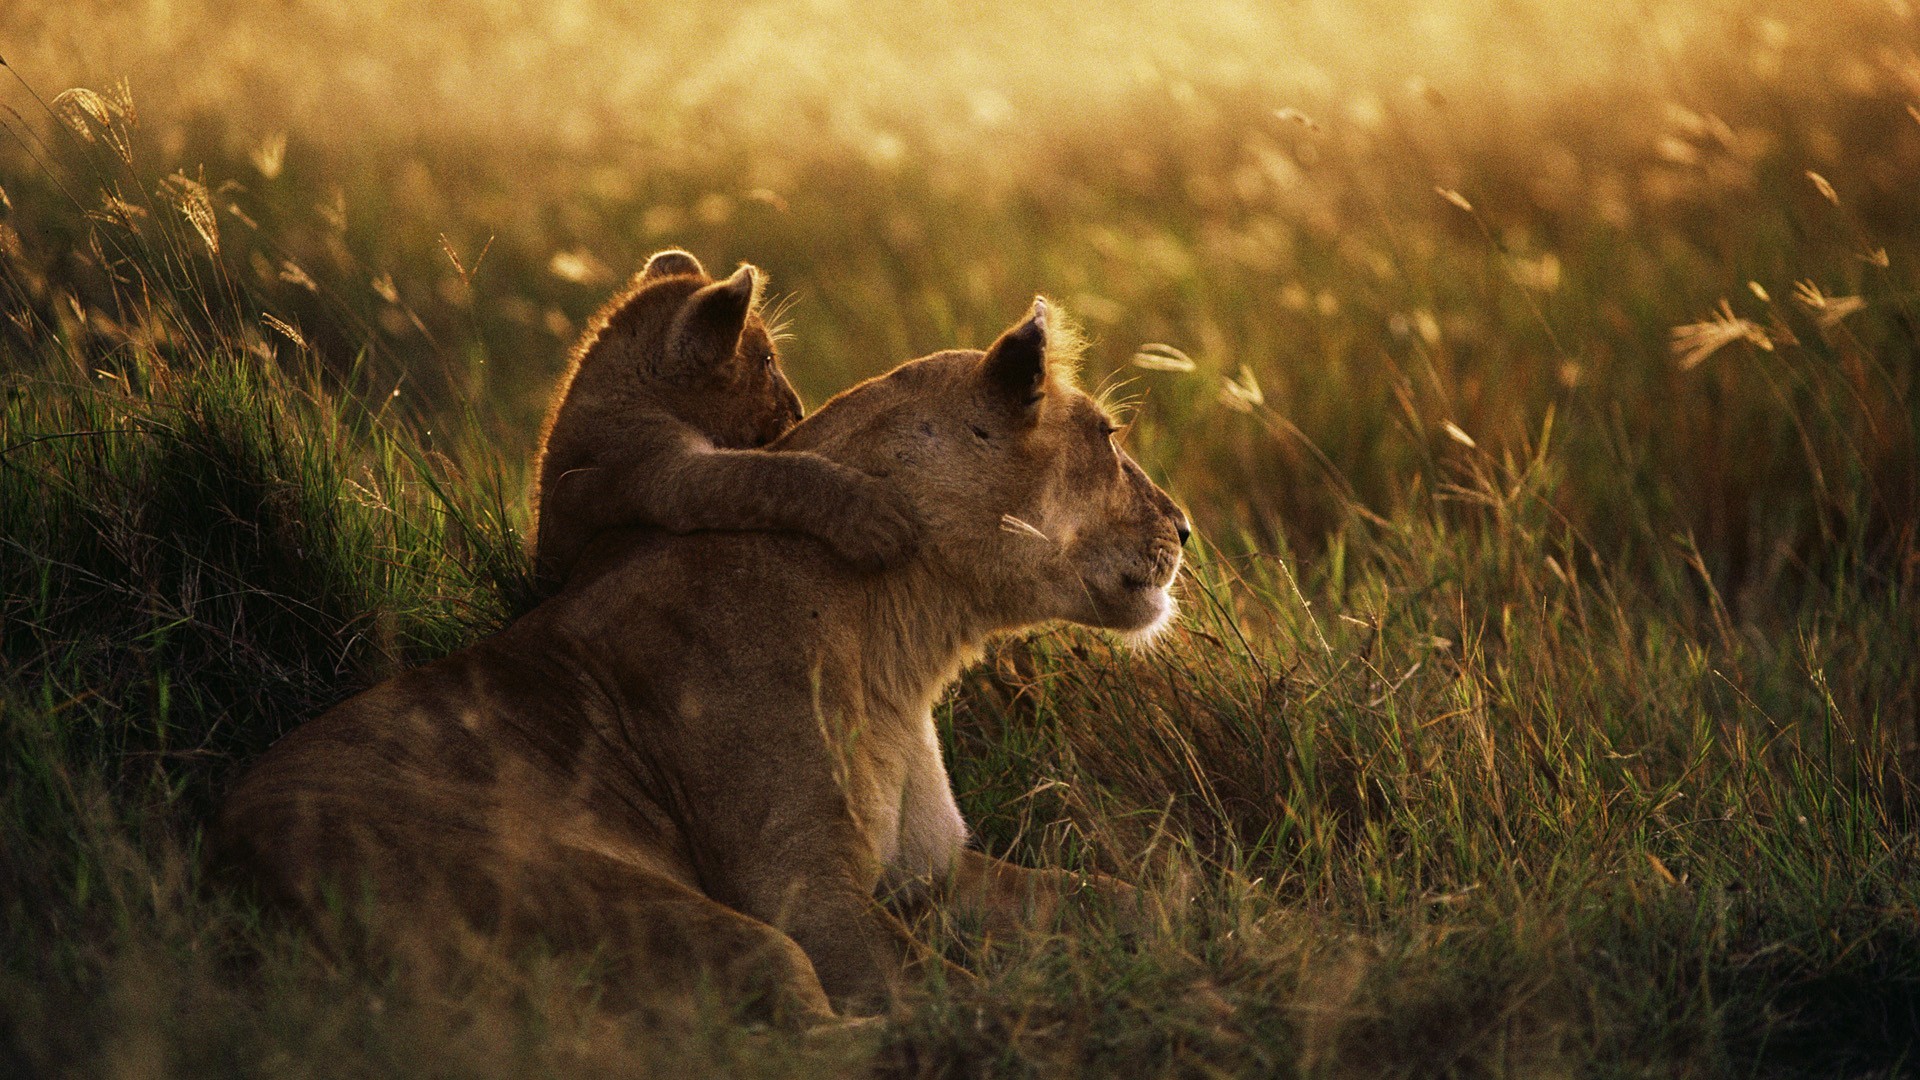 General 1920x1080 baby animals grass animals lion love sunset photography depth of field mammals big cats